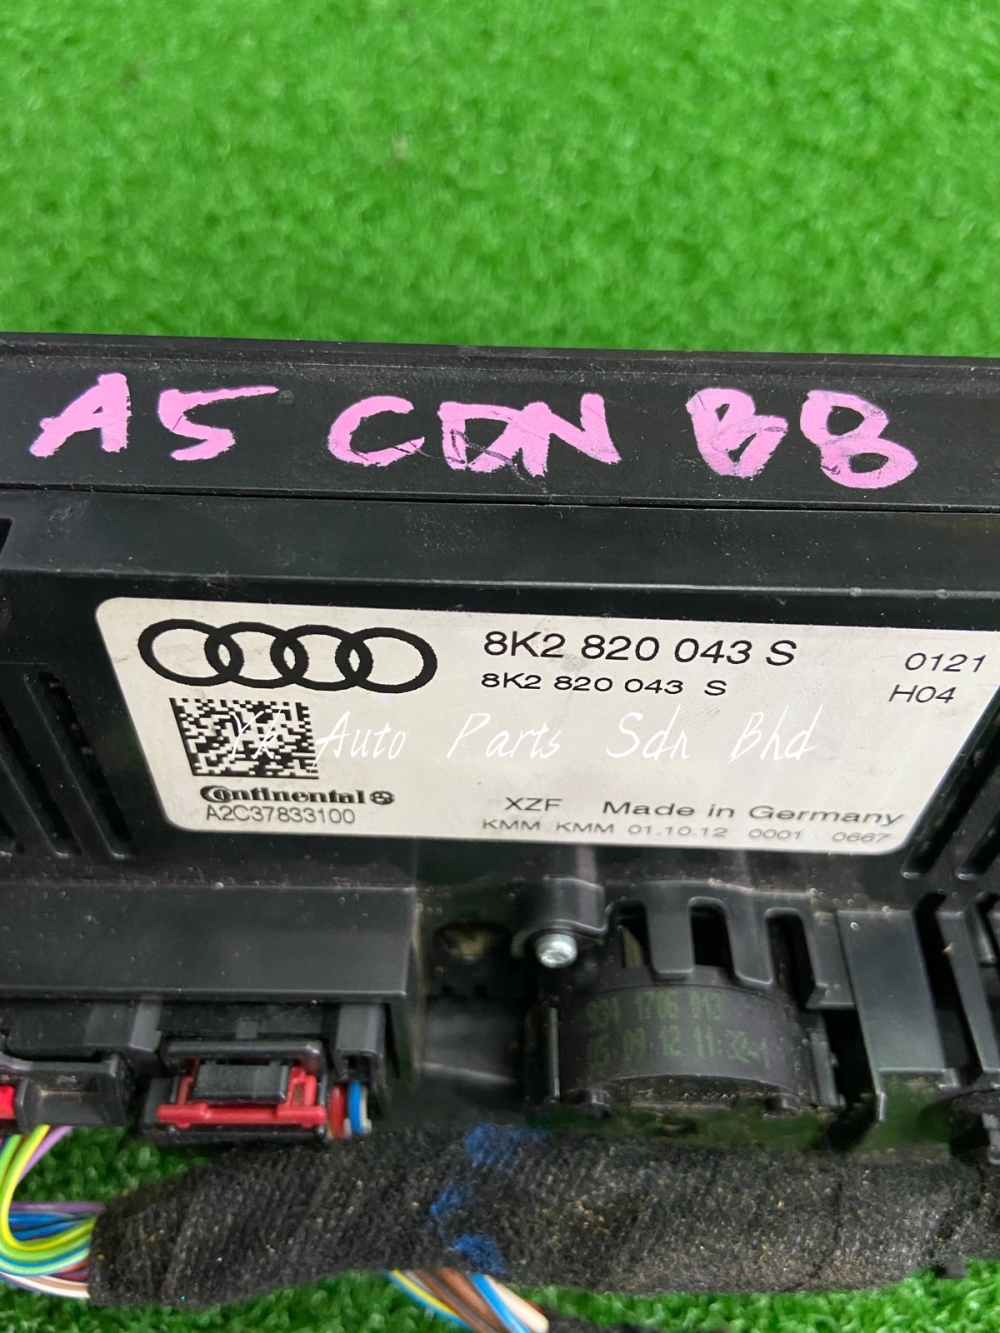 Audi A5 CDN B8 Air Cond Switch 8K2 820 043 S Used